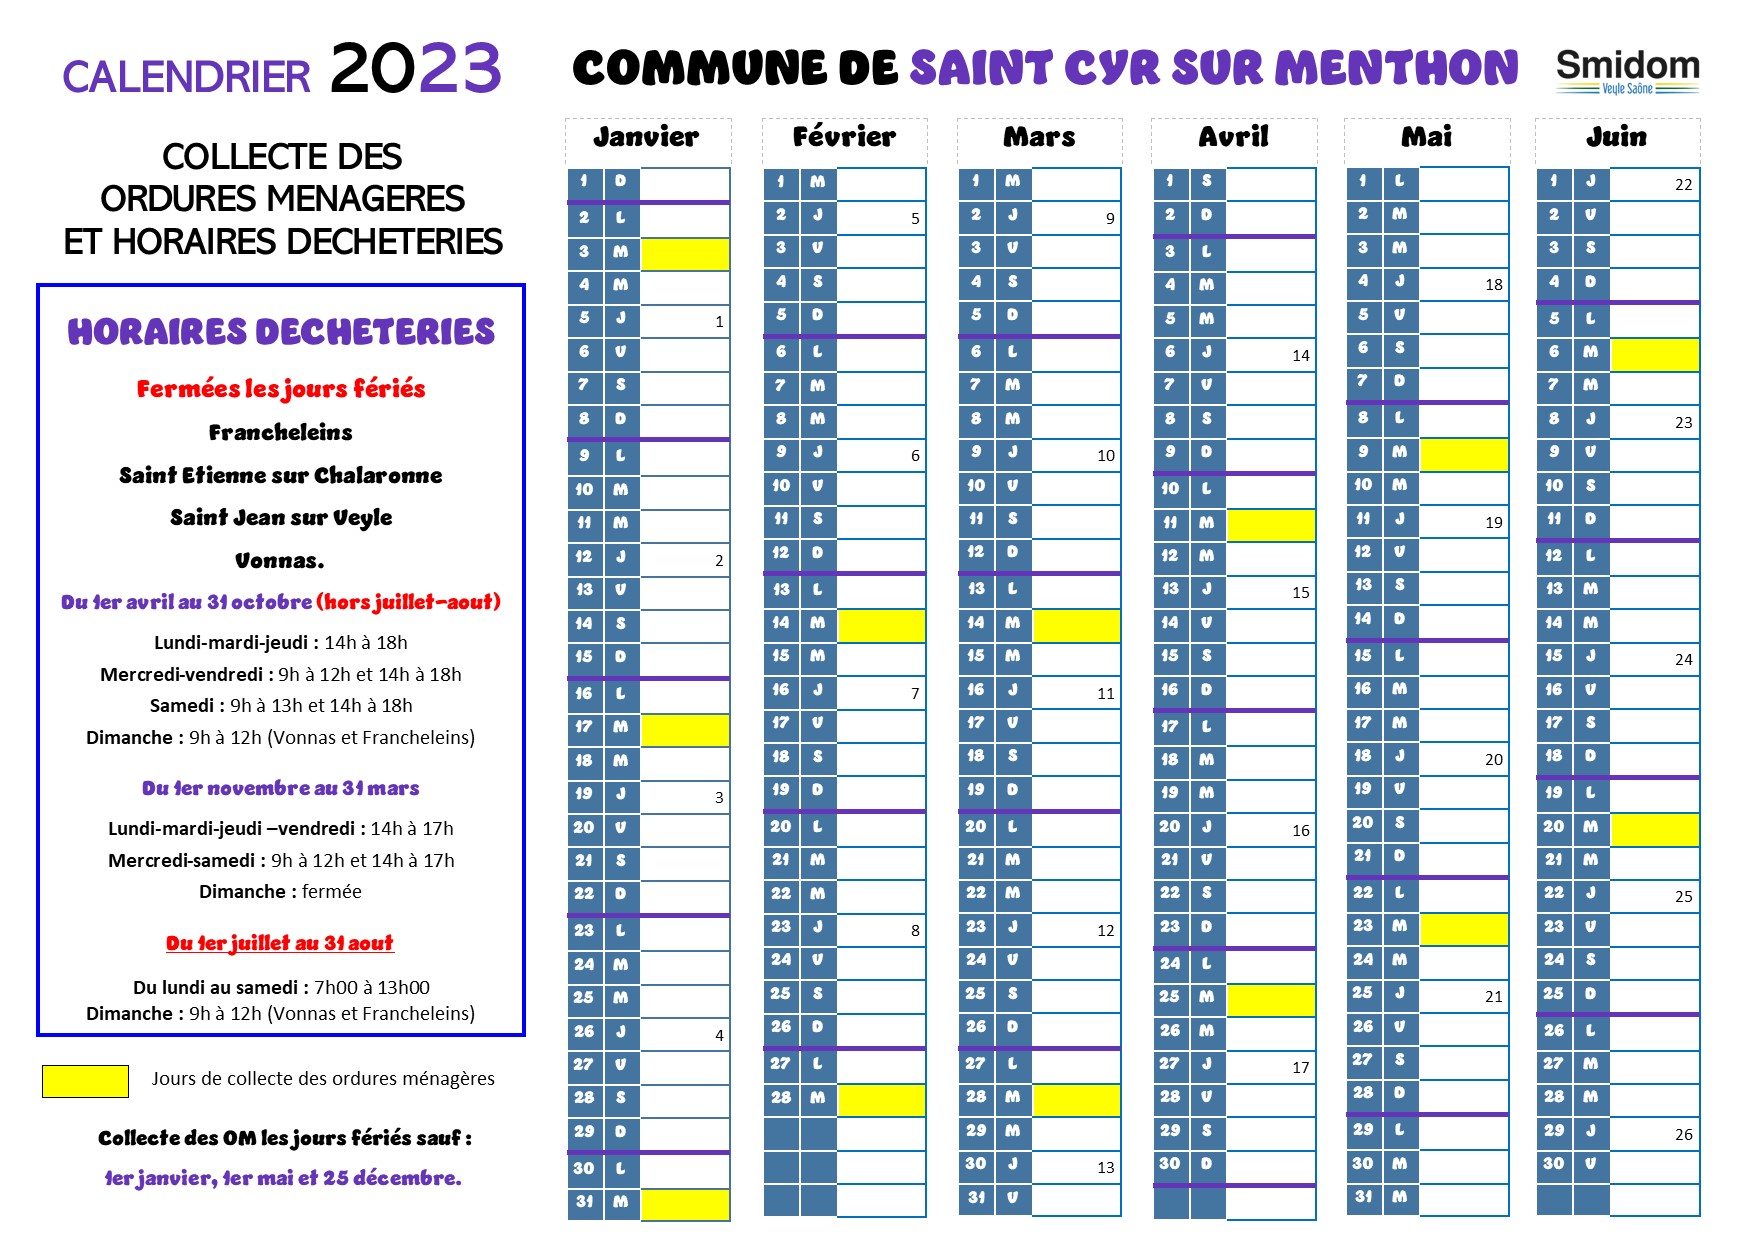 Saint Cyr sur Menthon Calendrier 2023.jpg